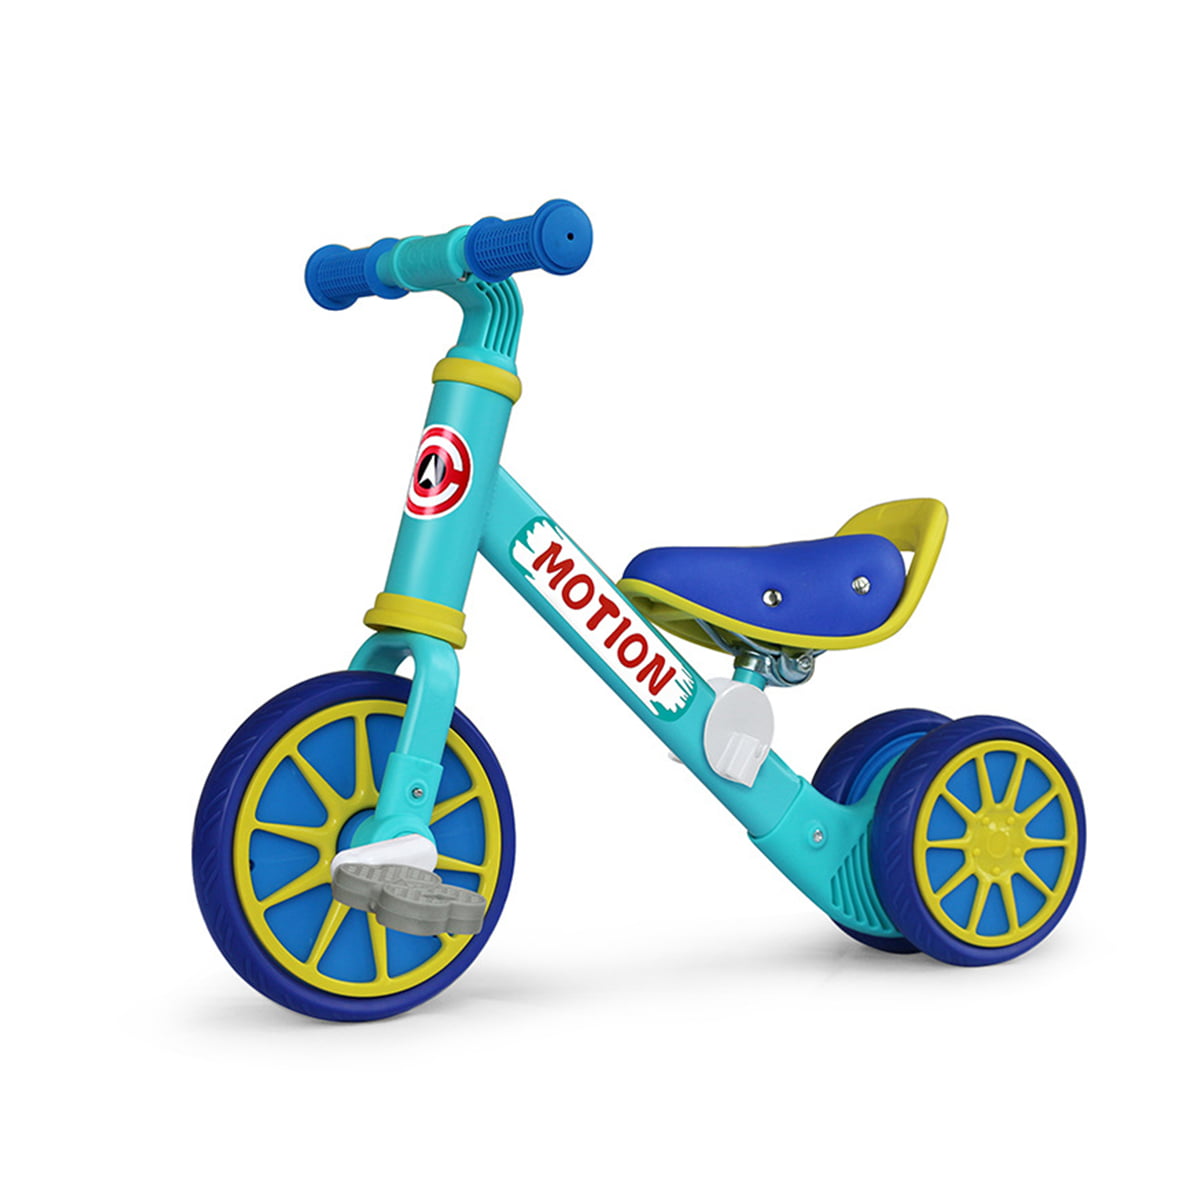 Kids Balance Bike Walker No Pedal Child Training Bicycle Toy w/ Adjustable Seat 